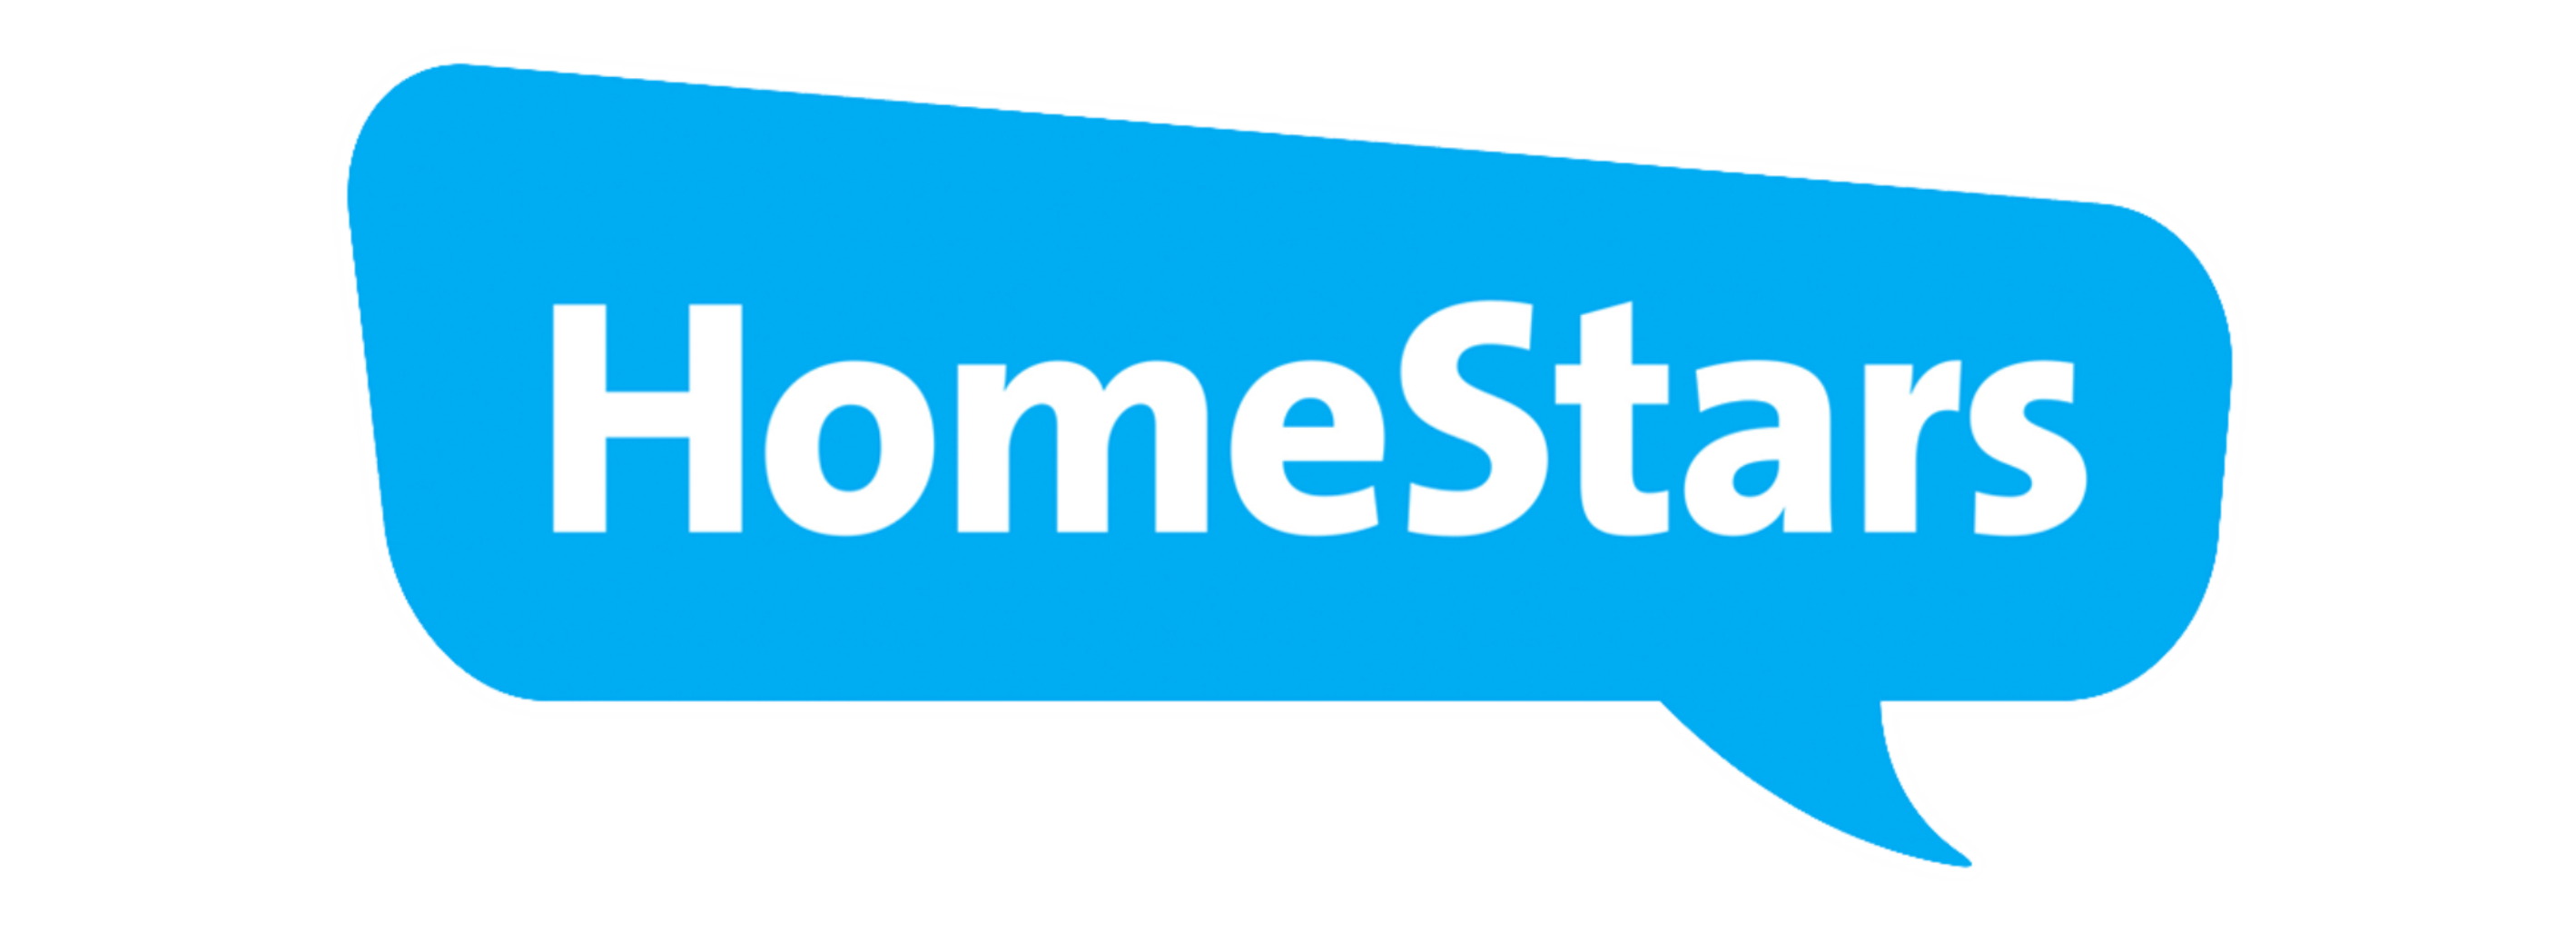 The Blue Homestars Logo